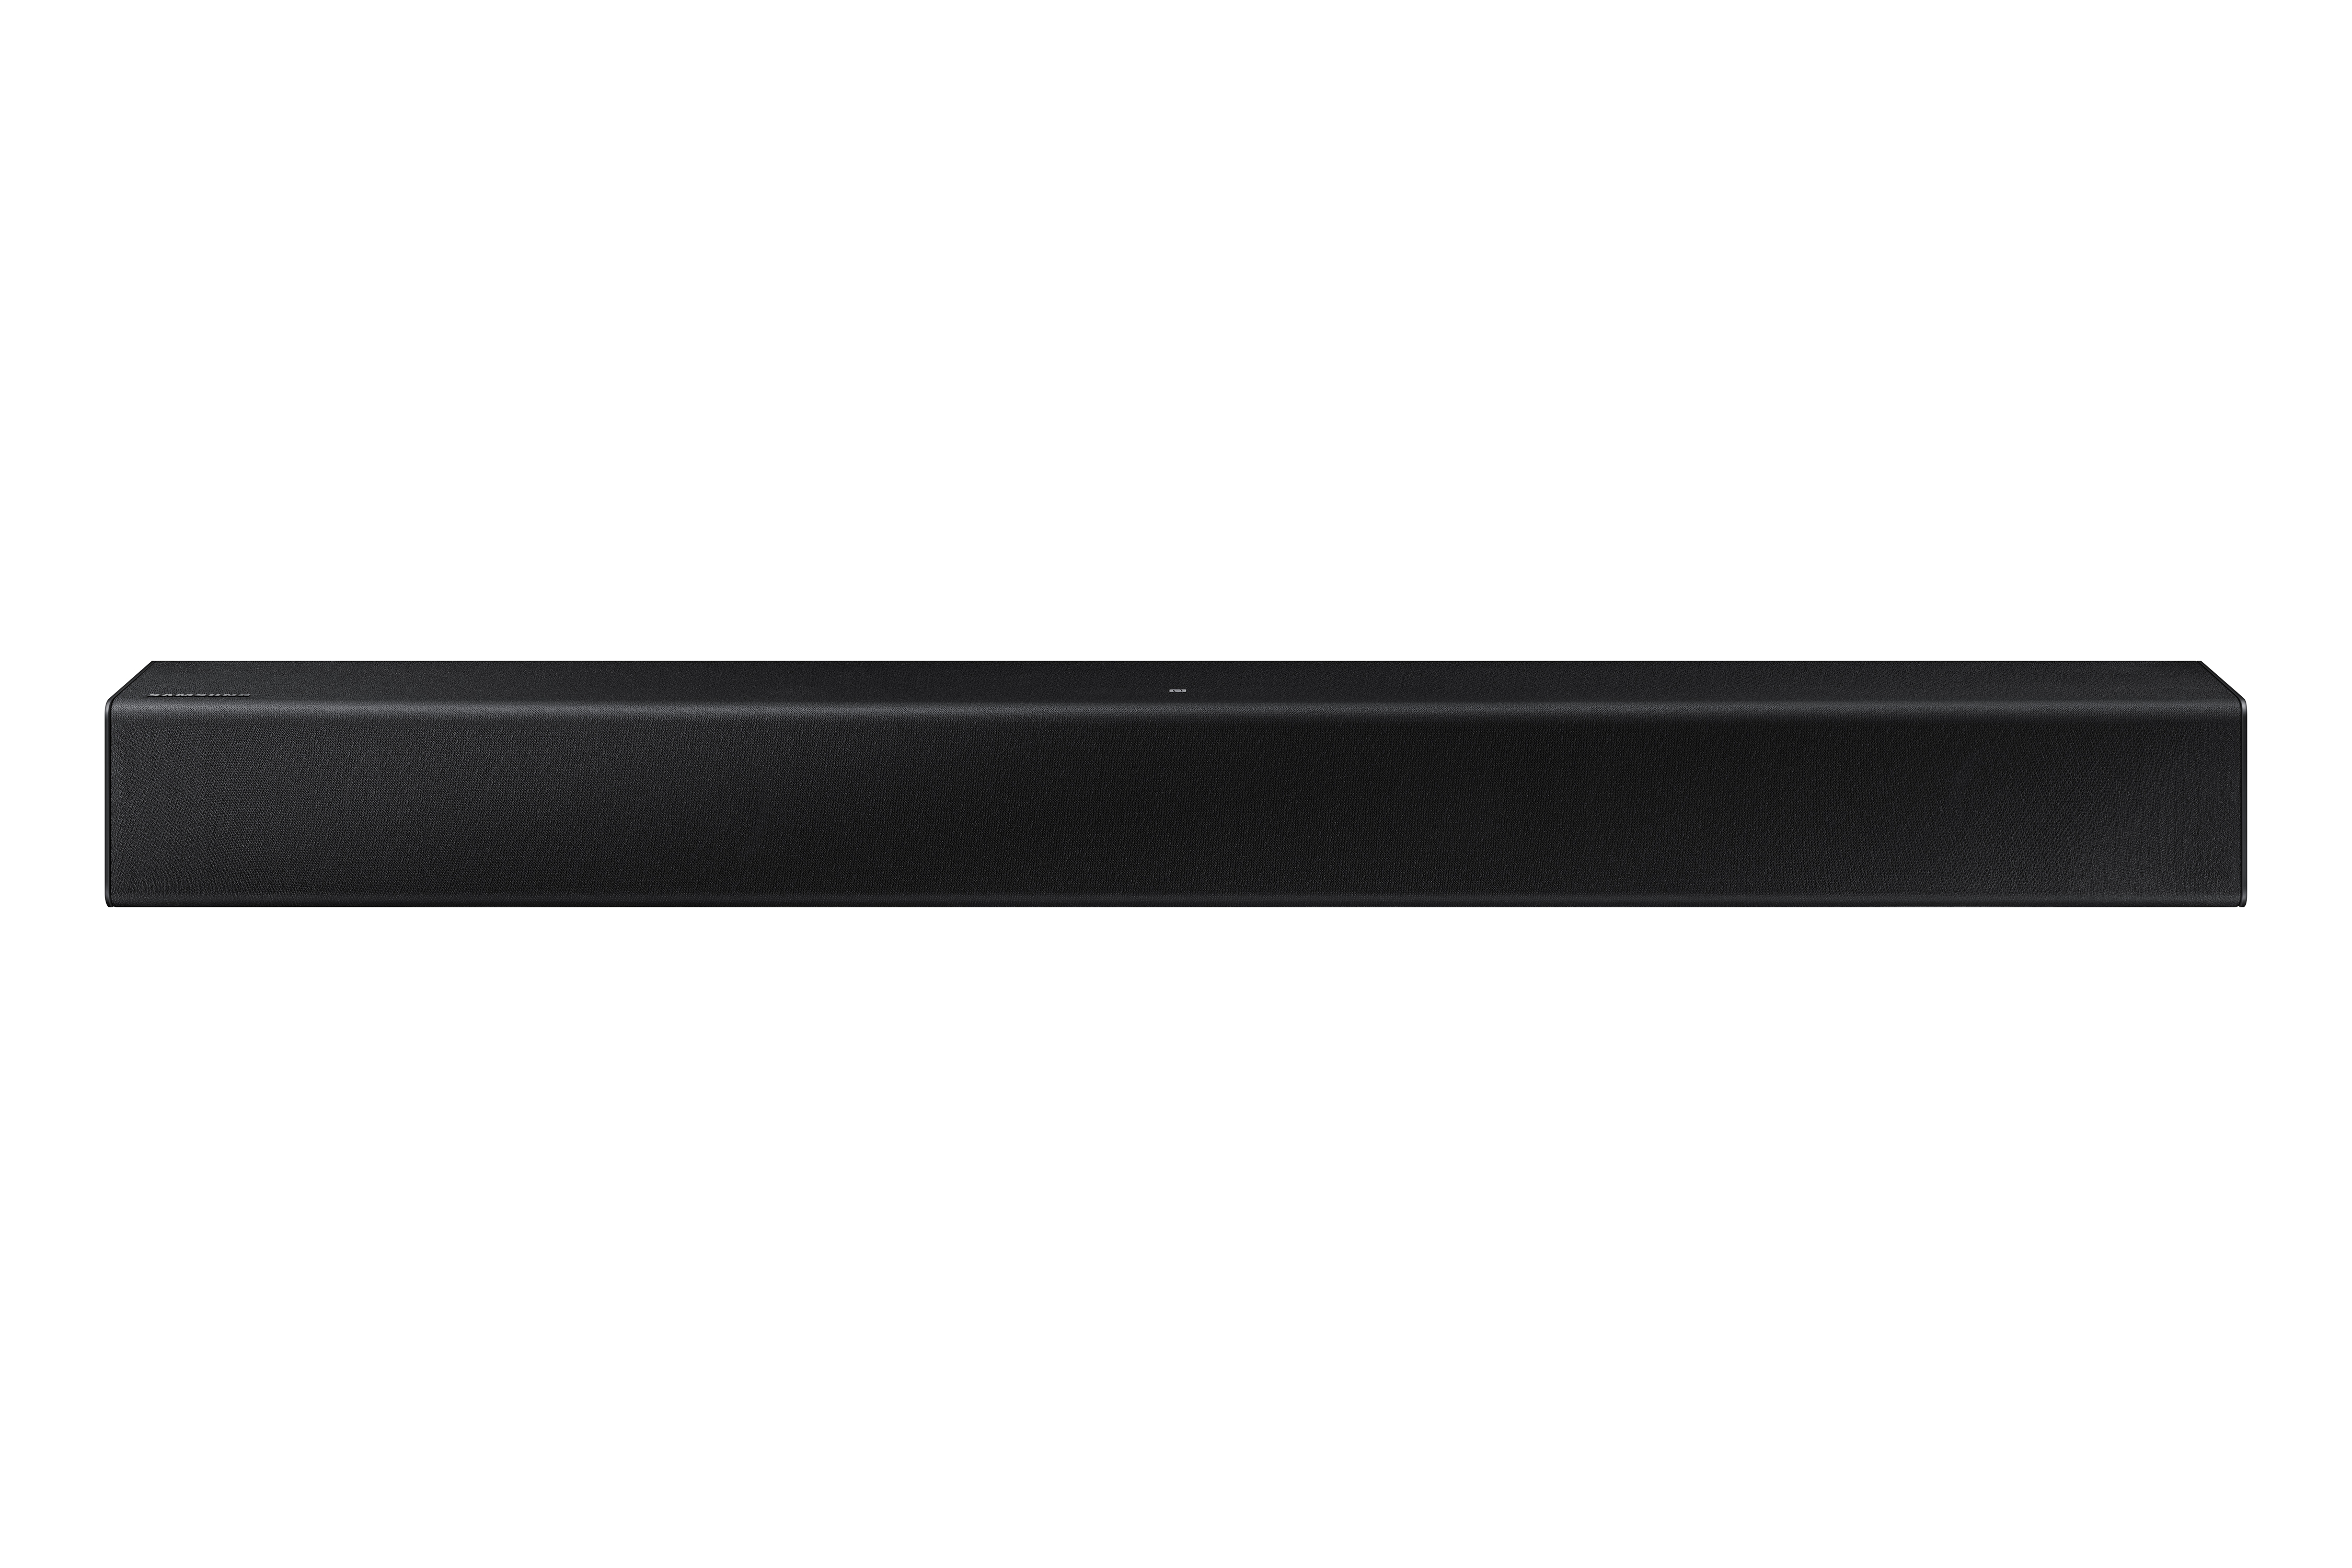 Renewed Black 4 Series 2 Channel HW-N400/ZA Samsung Soundbar Serial 